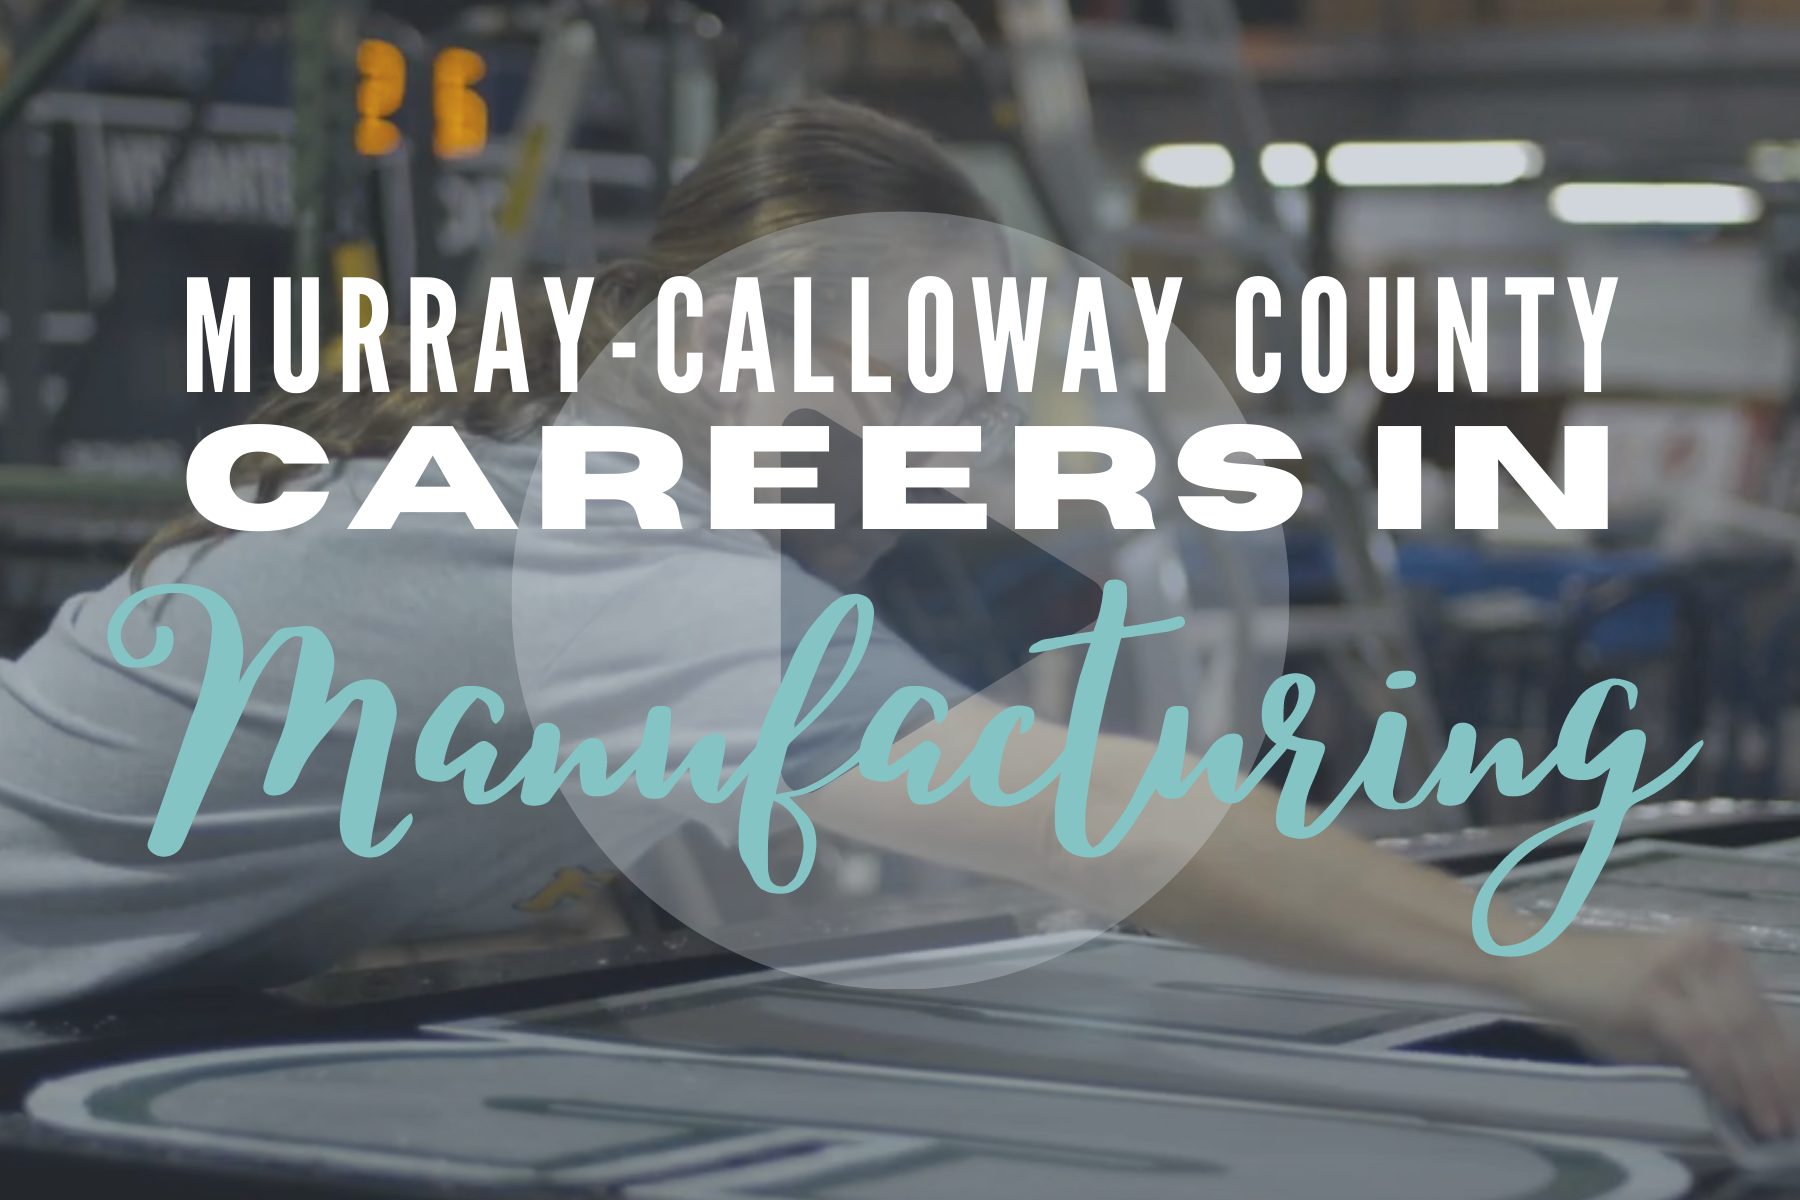 Murray-calloway county